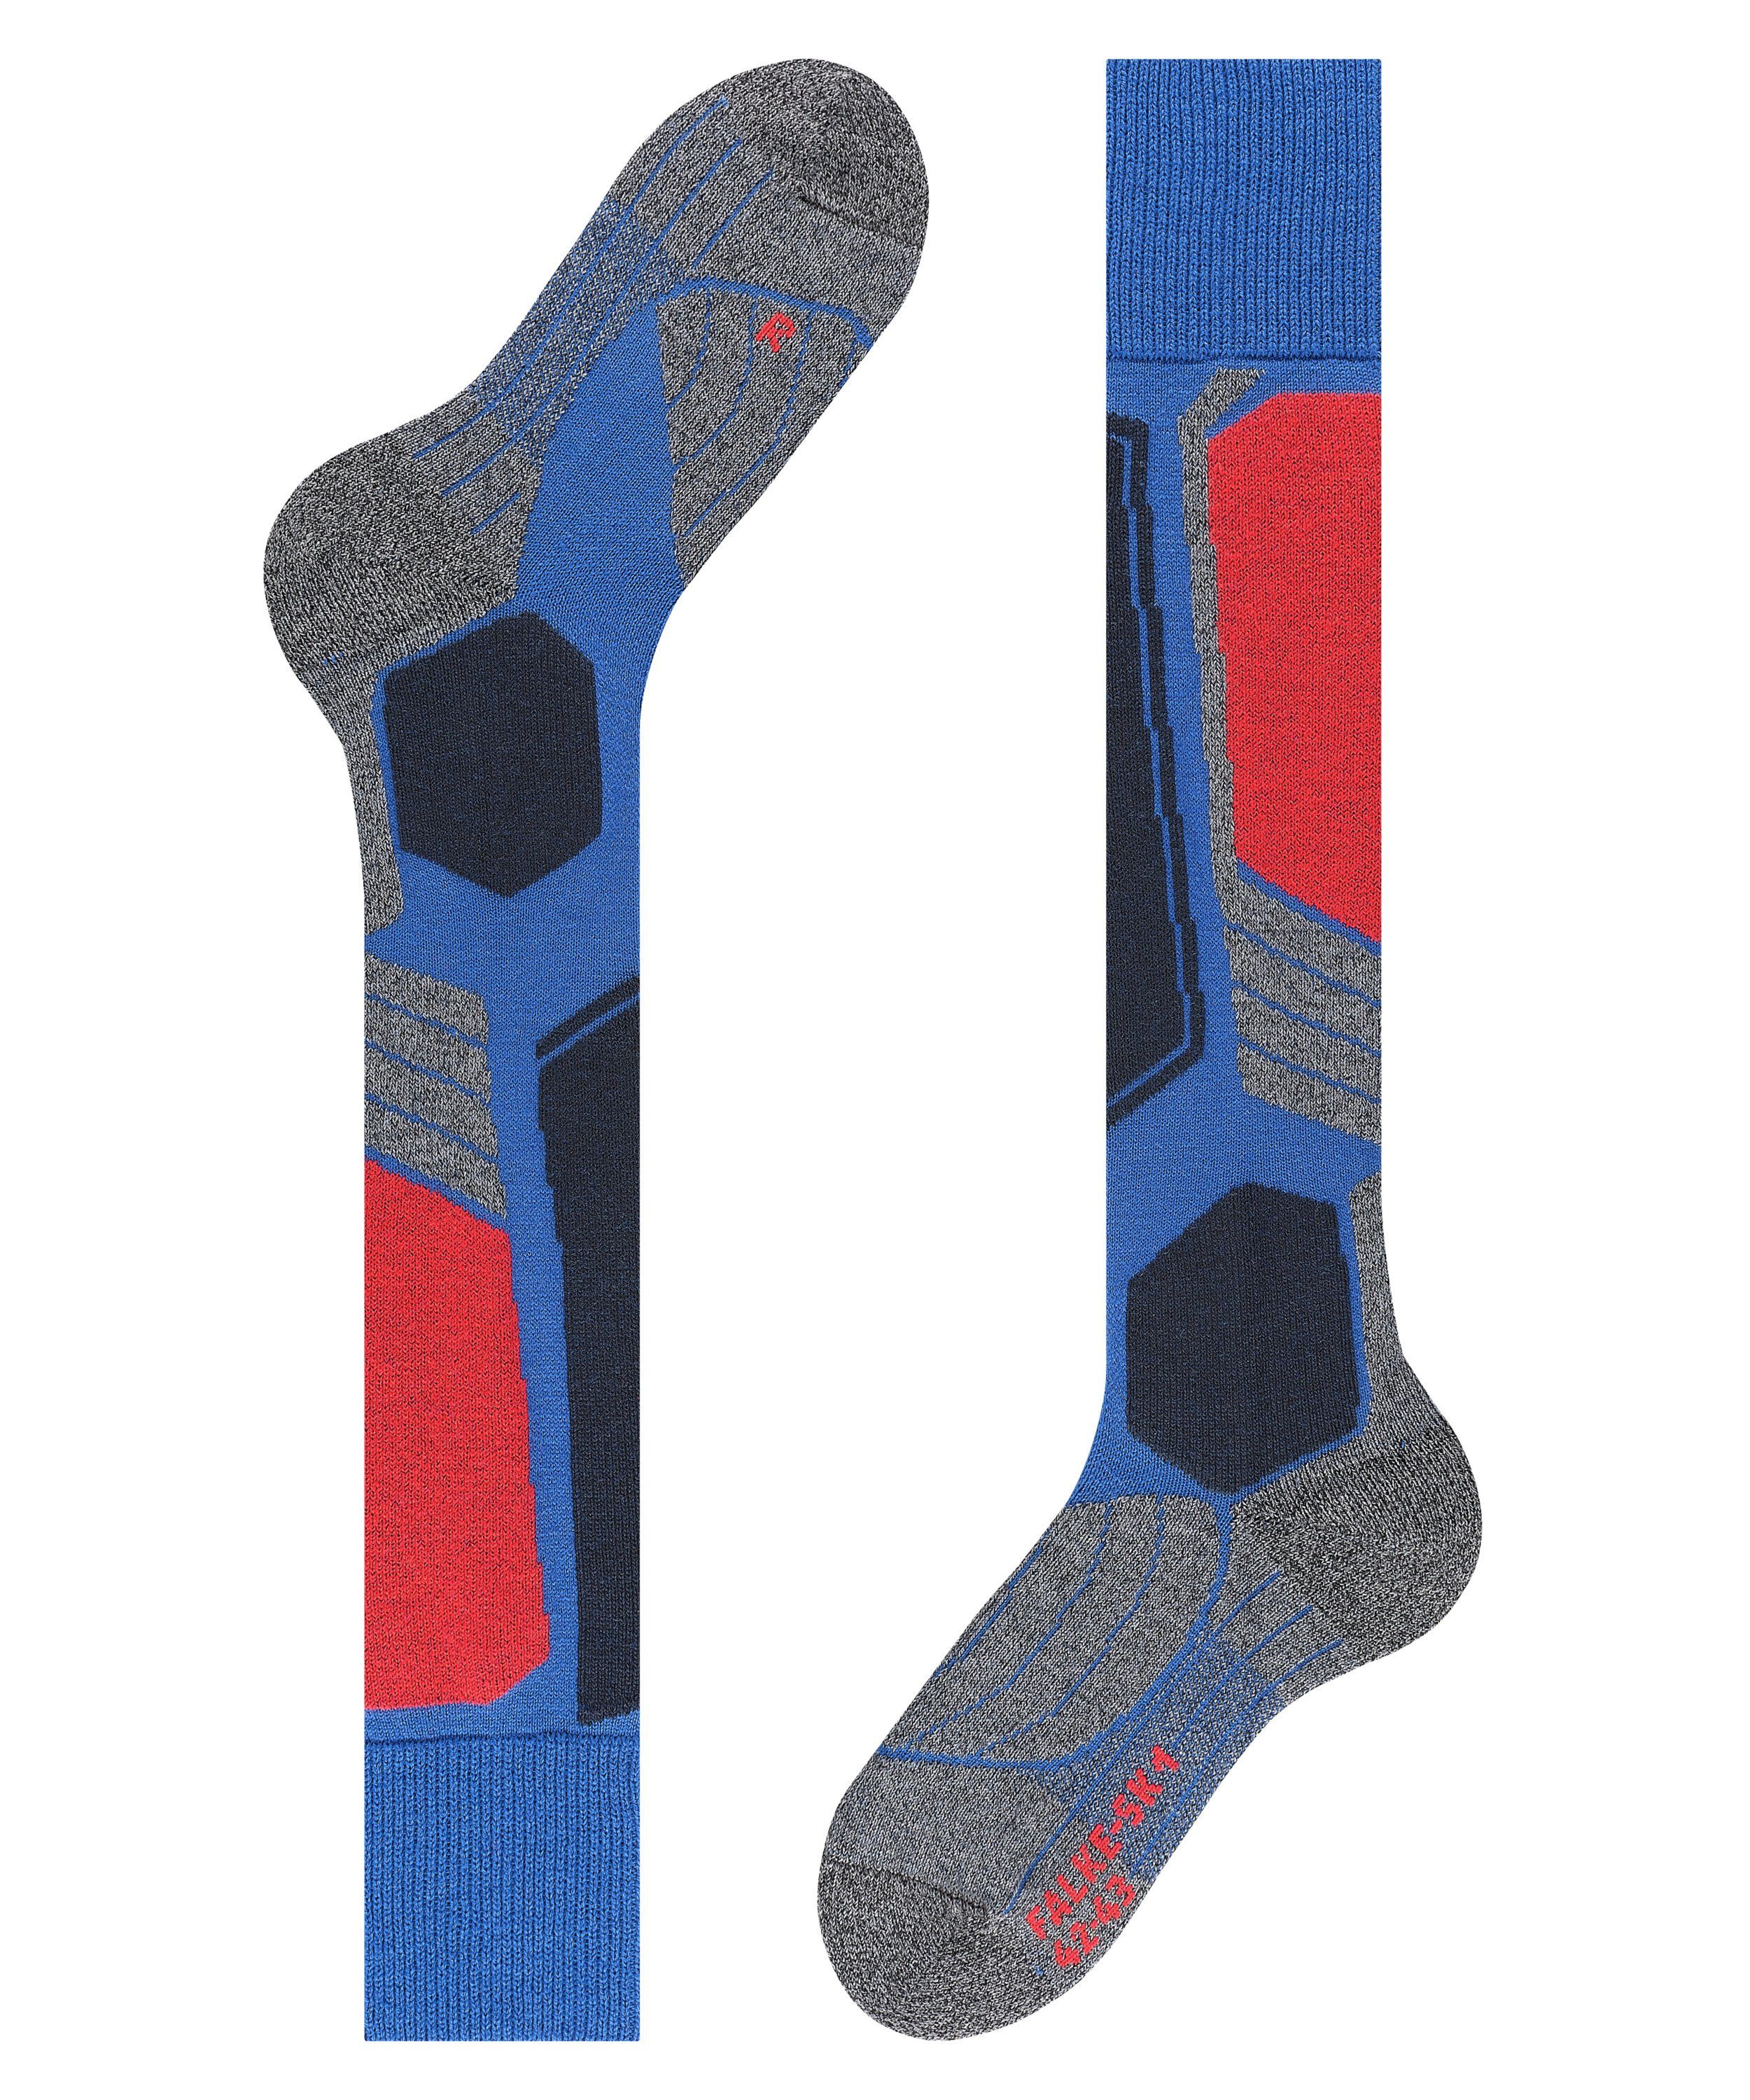 SK1 hohen FALKE olympic Polsterung Skisocken maximale für (6940) Comfort Komfort (1-Paar)